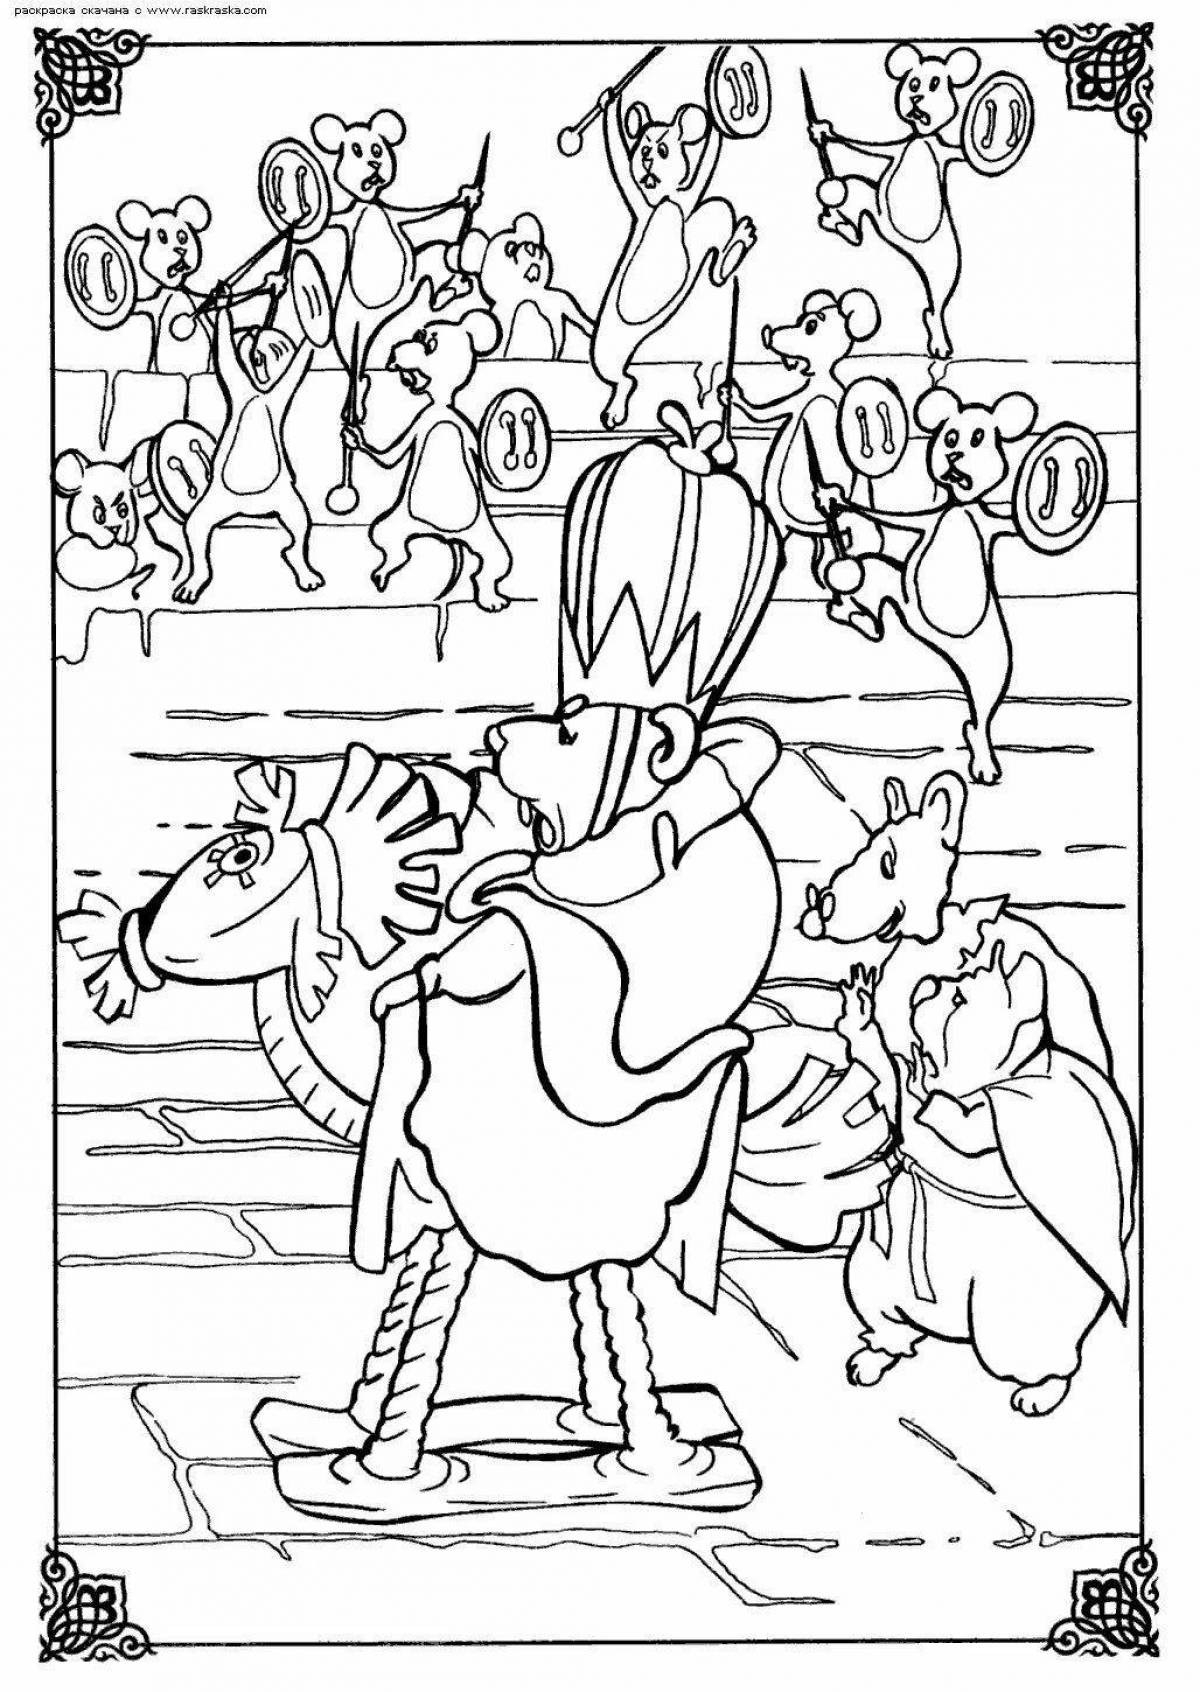 Nutcracker and Mouse King fun coloring book